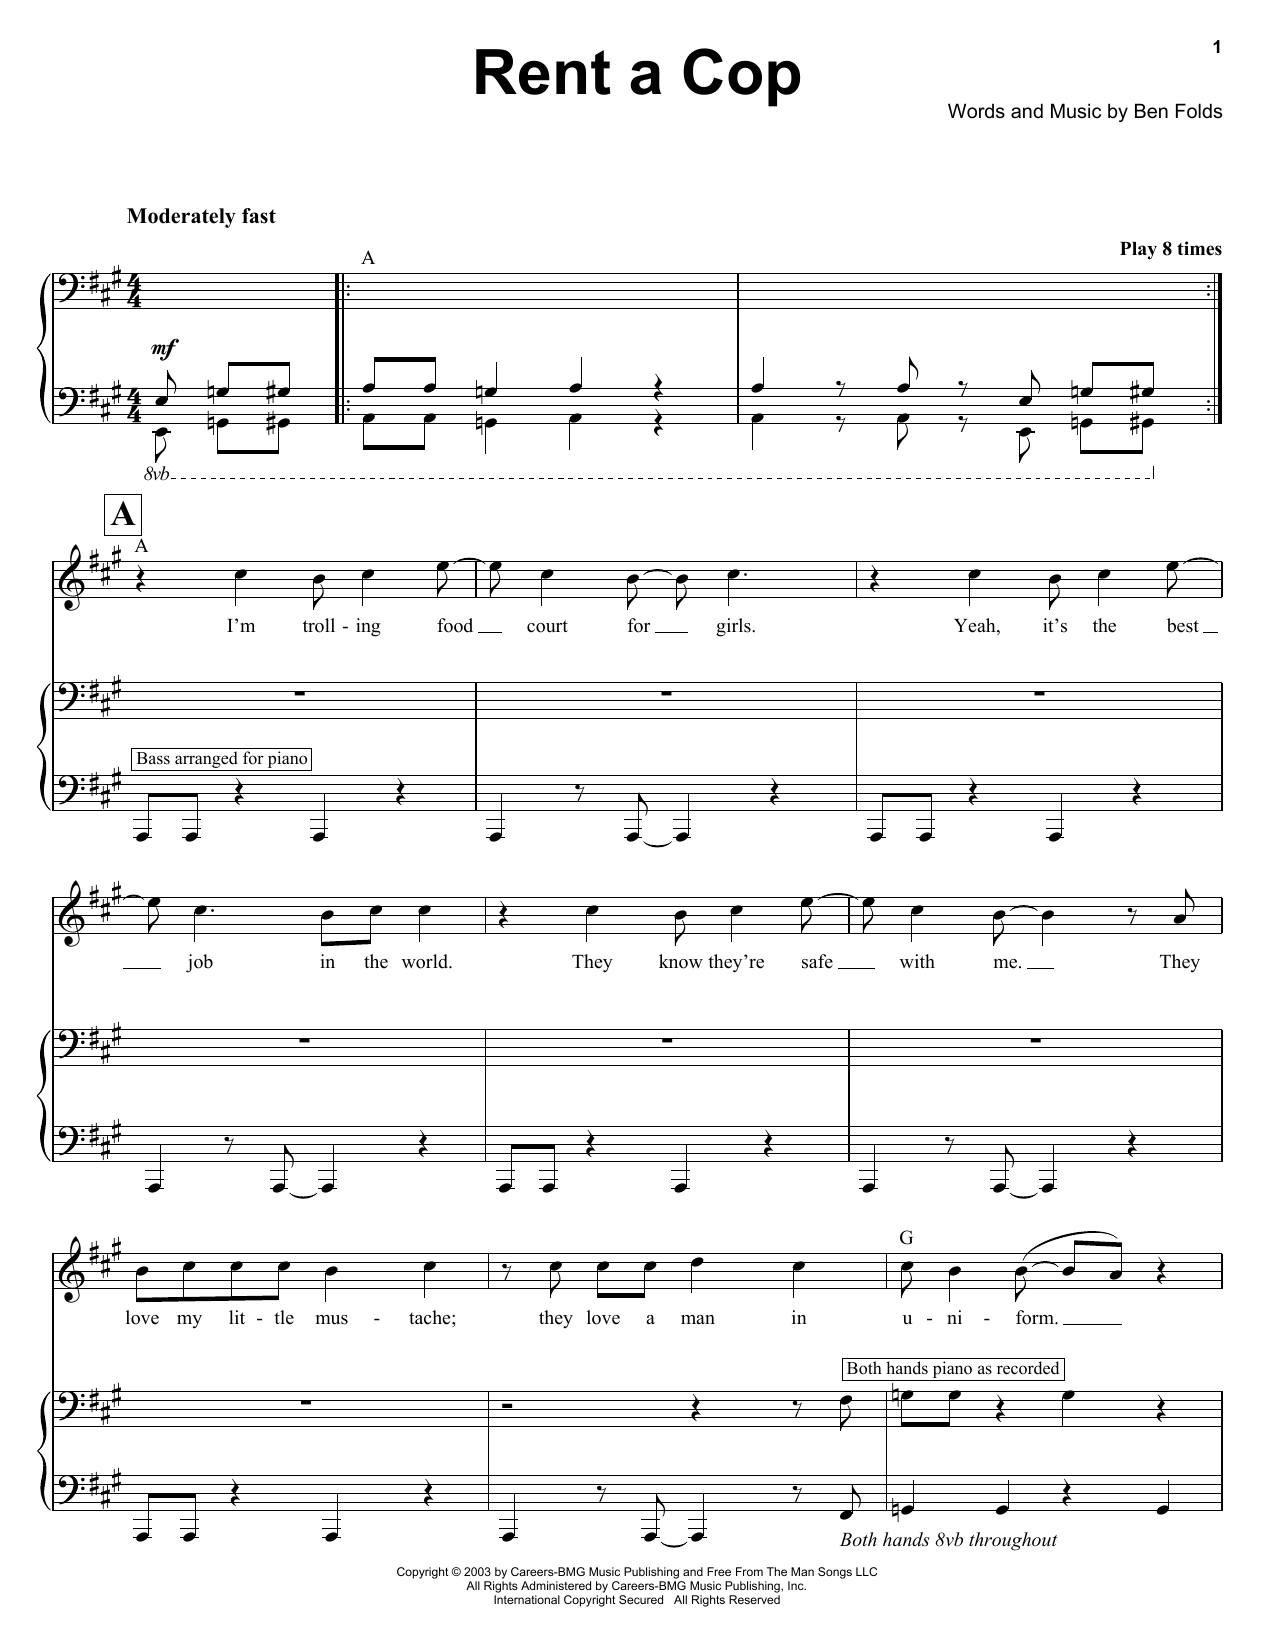 Ben Folds Rent A Cop Sheet Music Notes & Chords for Keyboard Transcription - Download or Print PDF